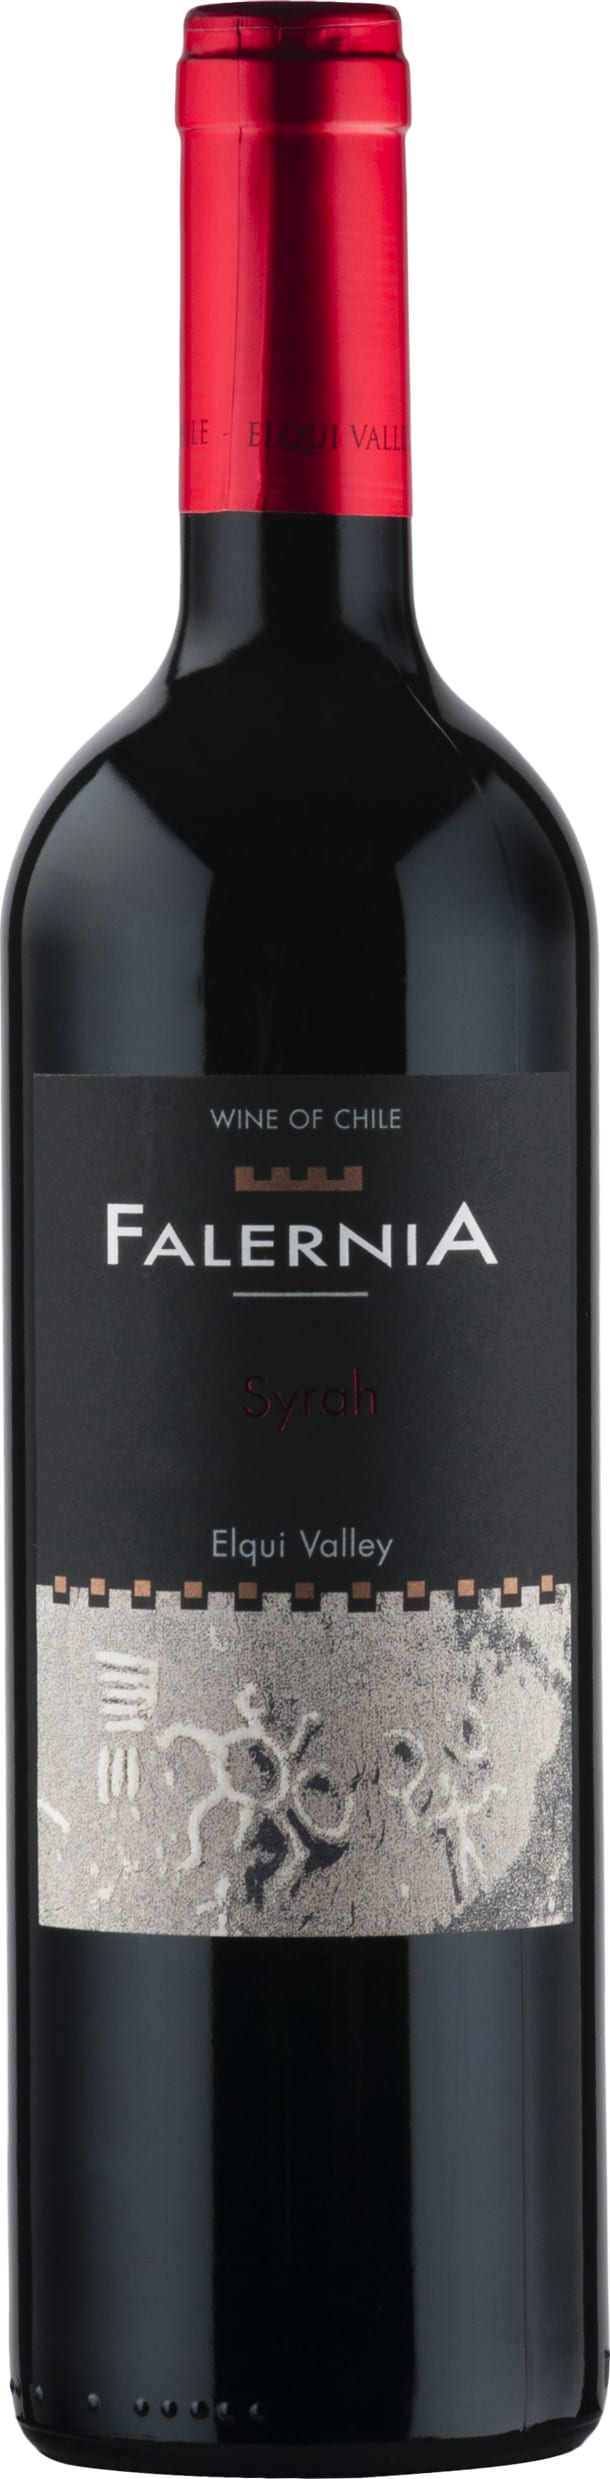 Vina Falernia Syrah Reserva 2017 75cl - Buy Vina Falernia Wines from GREAT WINES DIRECT wine shop